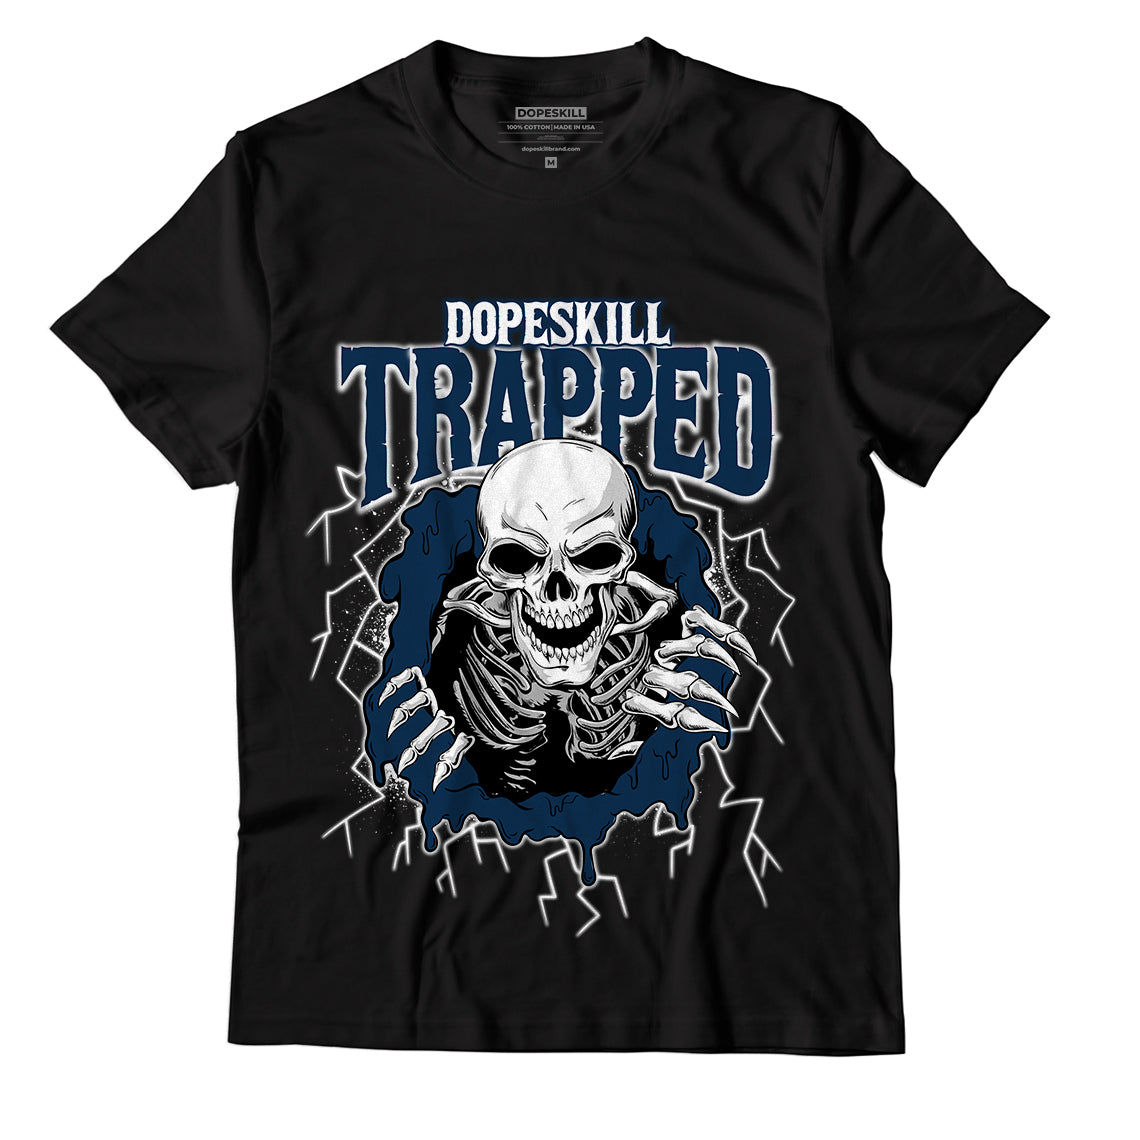 Jordan 13 Brave Blue DopeSkill T-Shirt Trapped Halloween Graphic - Black